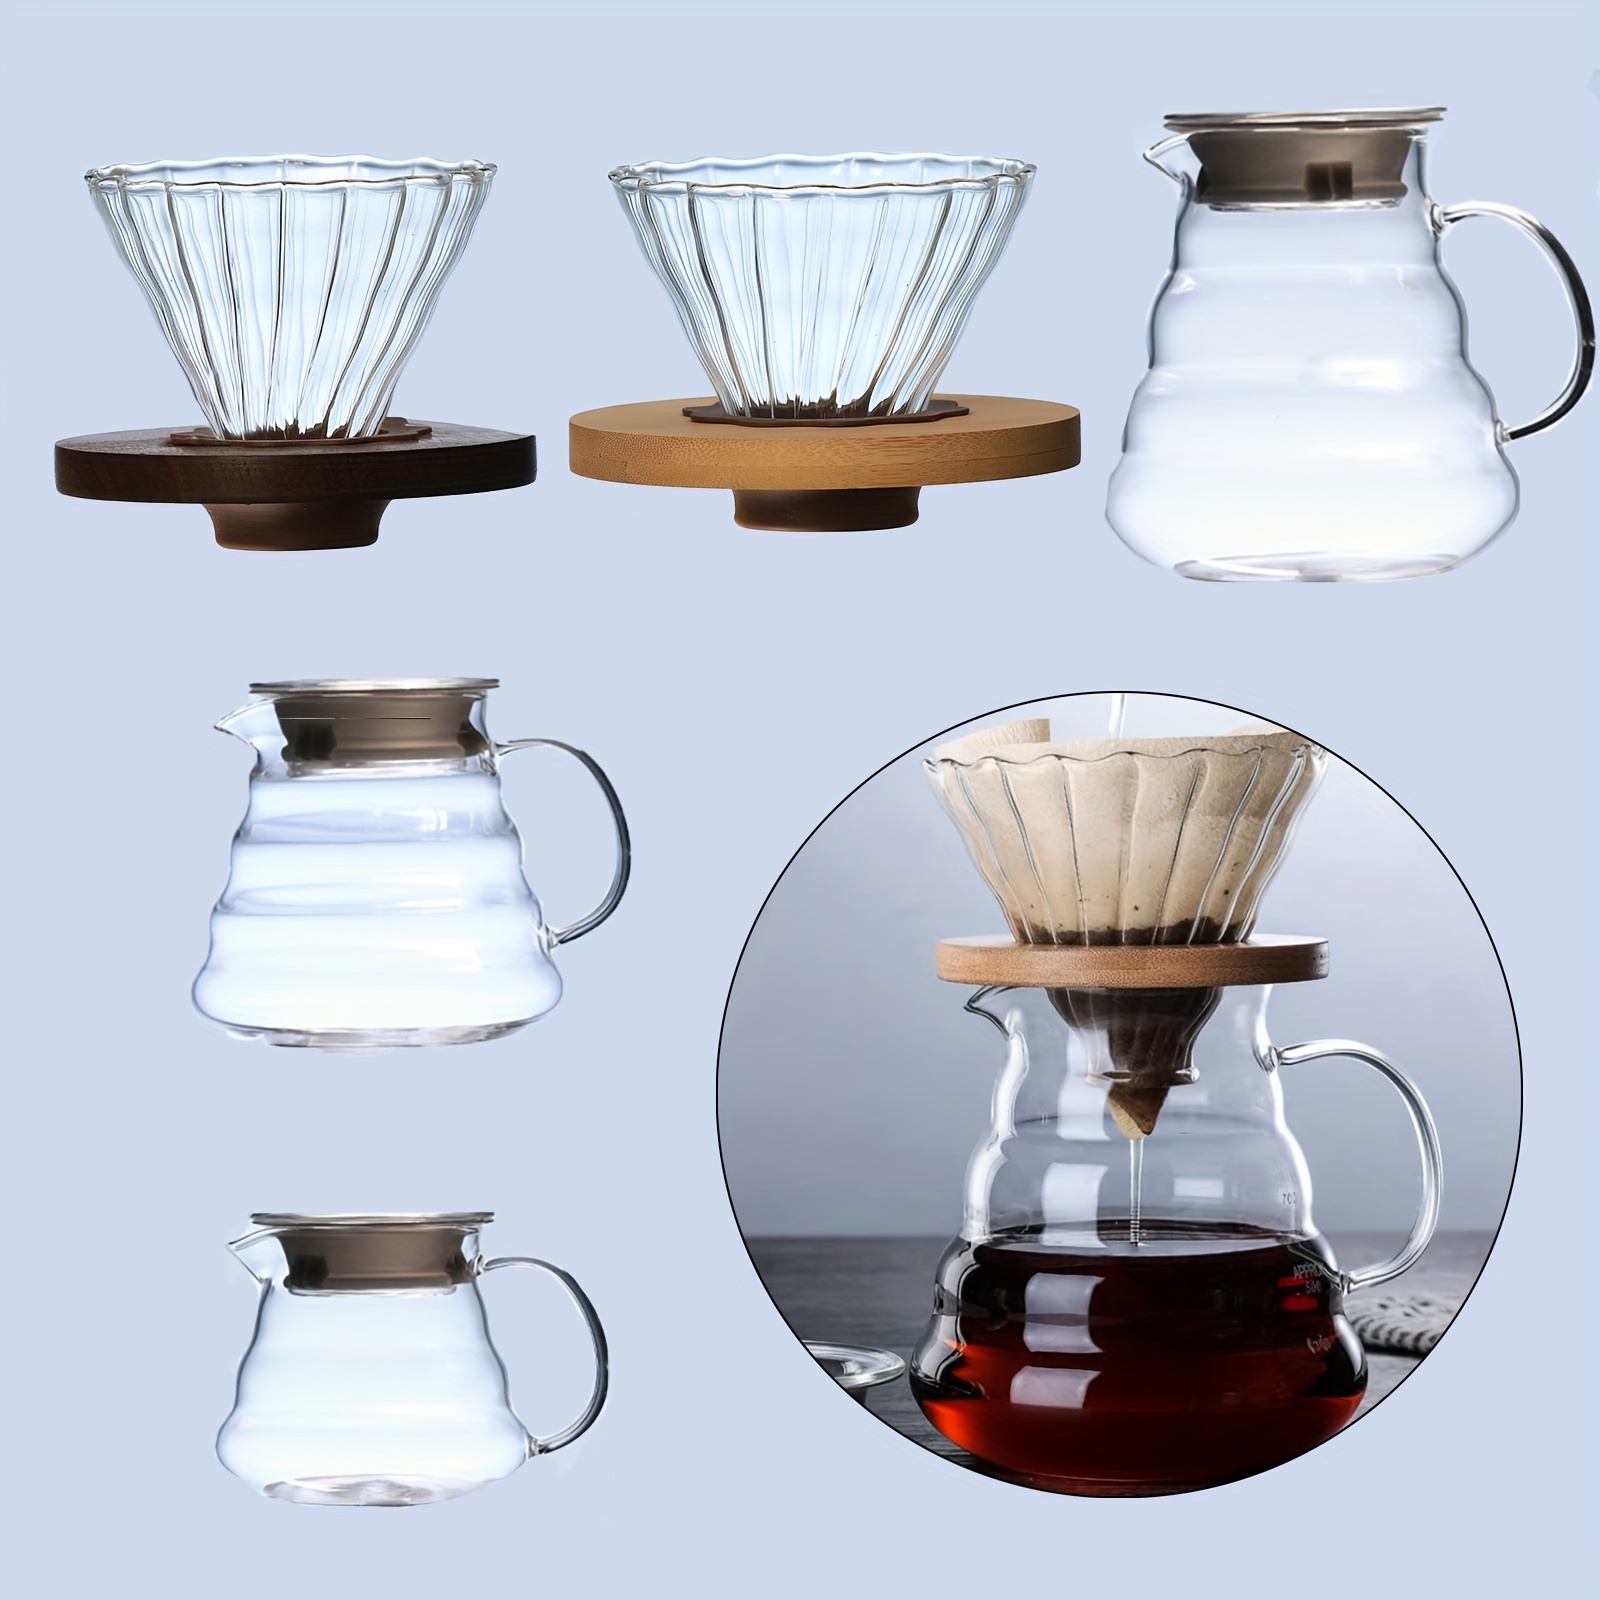 Glass Carafe Brewers: Quality Glass Carafe Coffee Maker